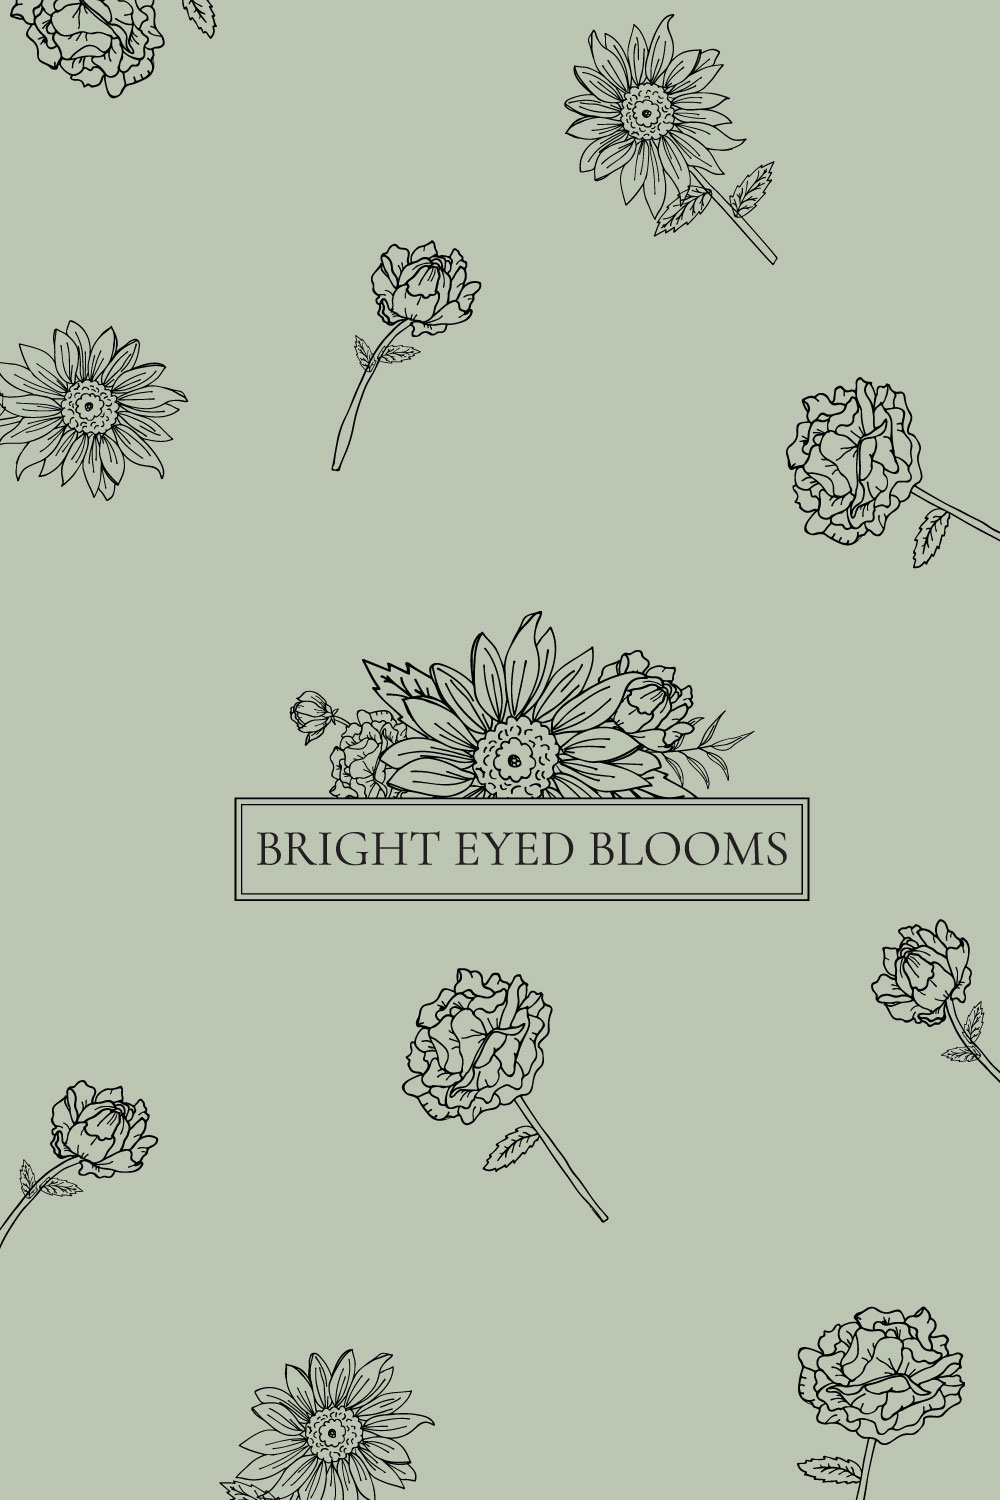 Bright Eyed Blooms brand pattern